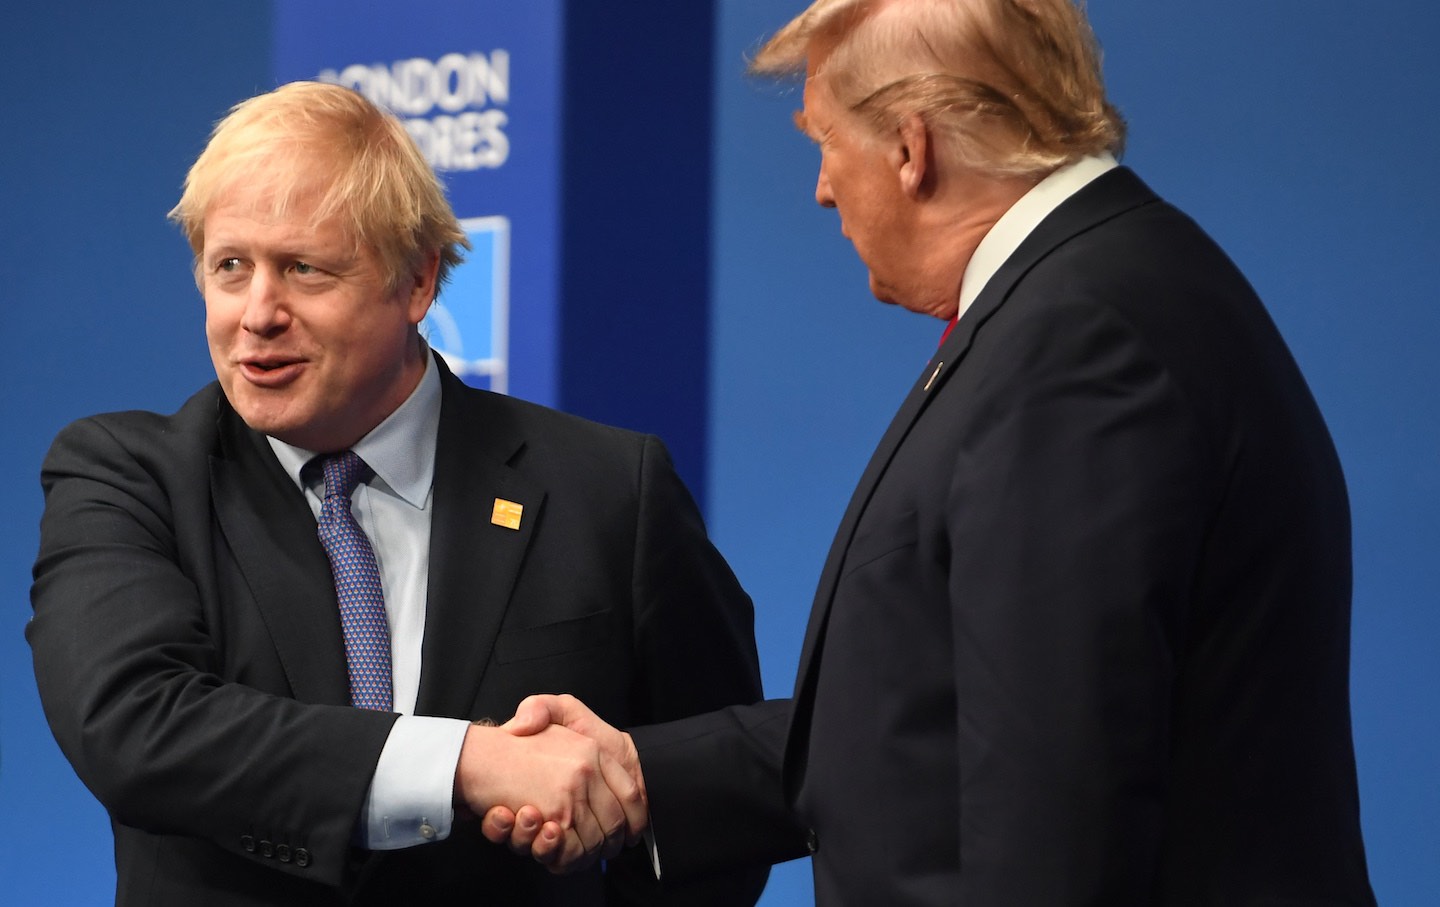 Boris Johnson and Donald Trump